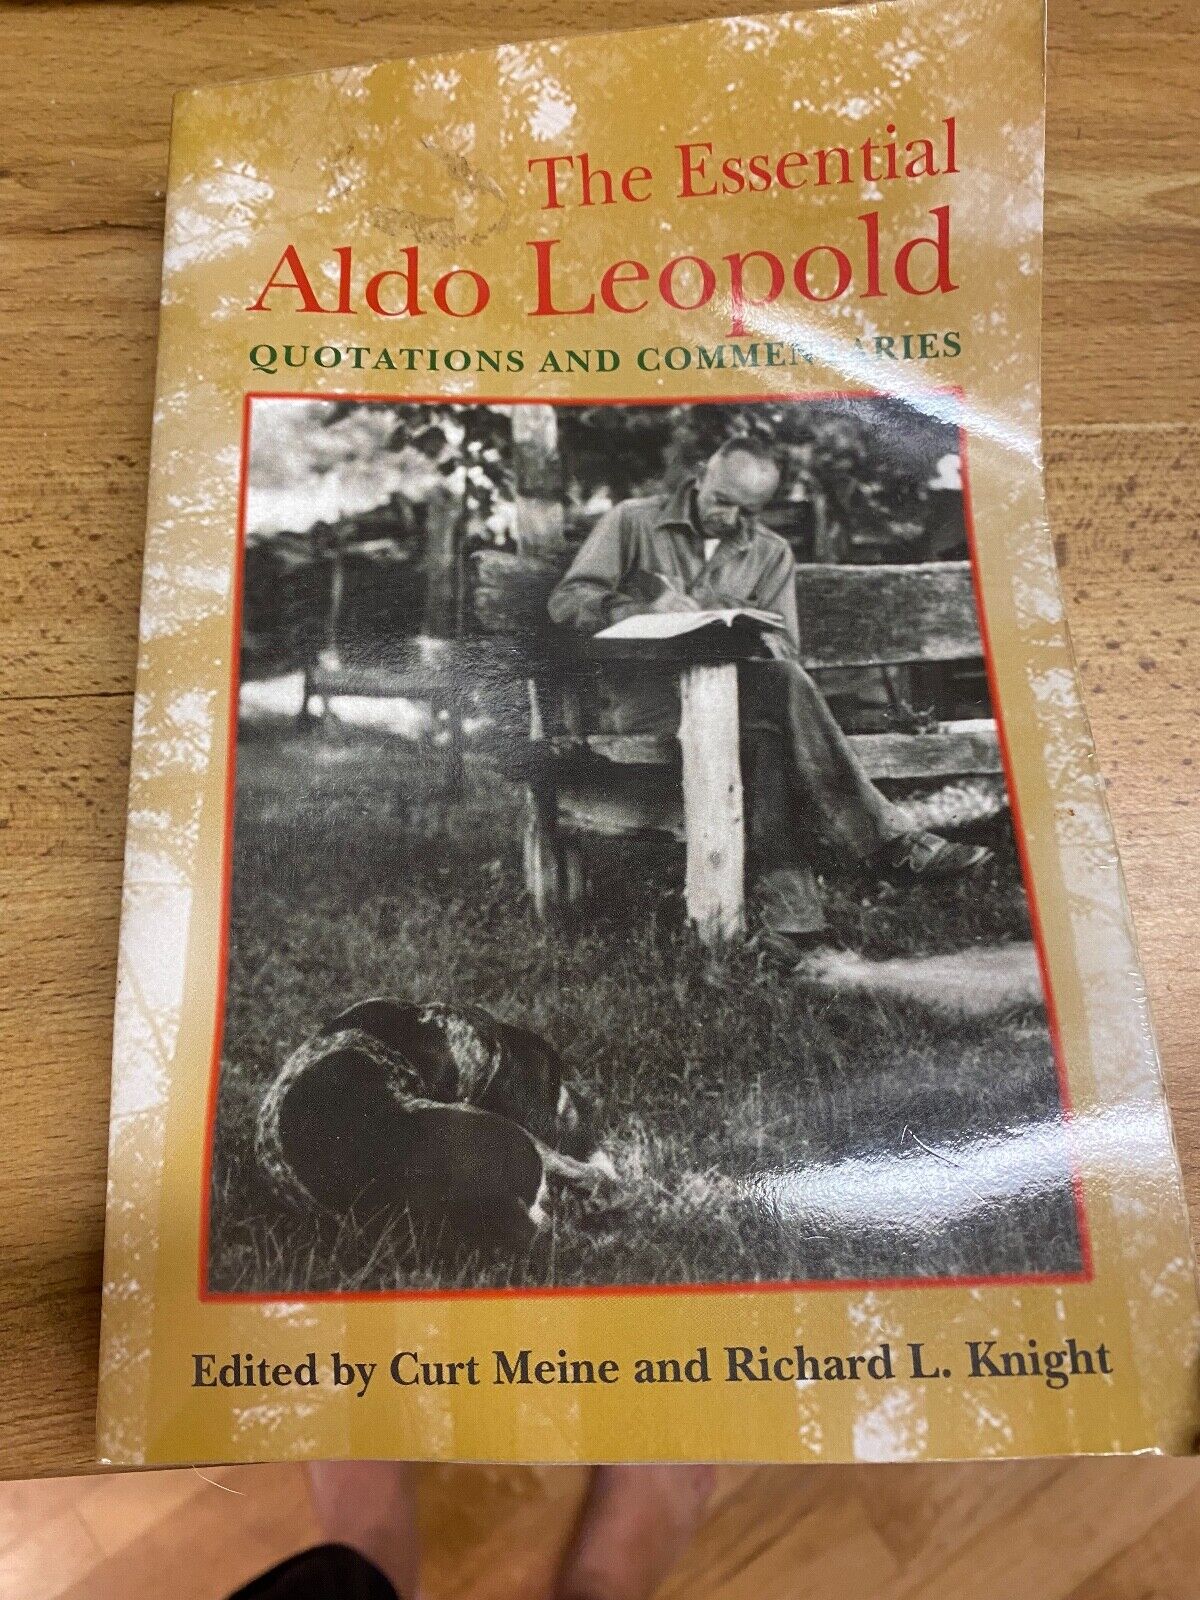 Book The essential Aldo Leopold Edited by Curt Maine & Richard L Knight PB 1999